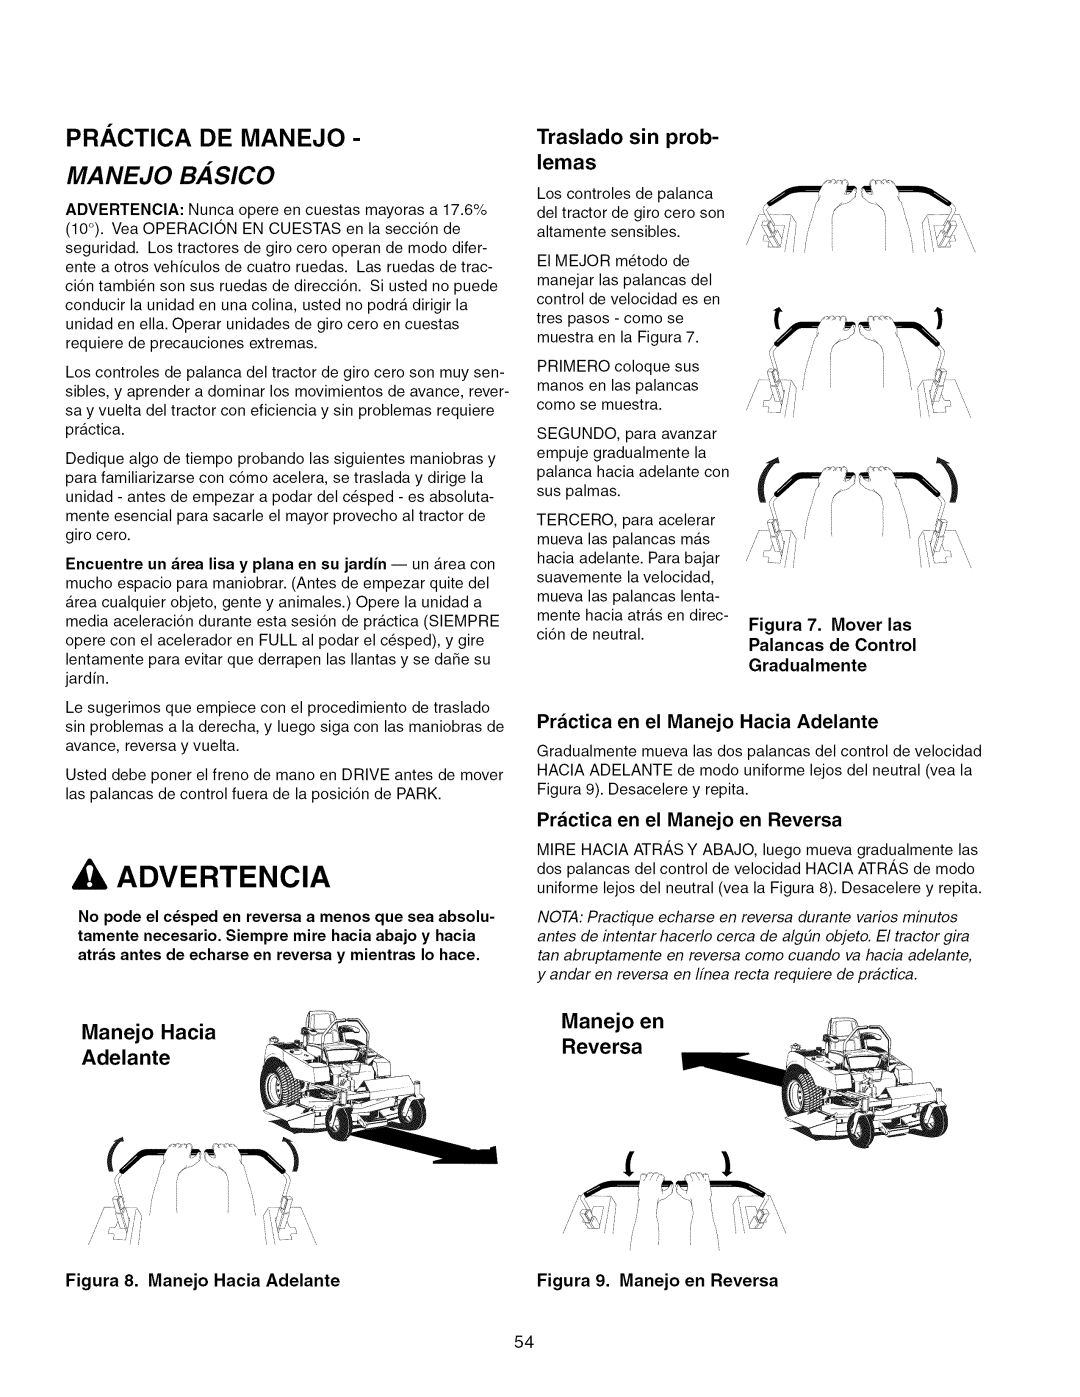 Craftsman ZTS 6000 Practica De Manejo, Manejo Basico, Manejo en, Reversa, Traslado sin prob- lemas, Manejo Hacia, Adelante 